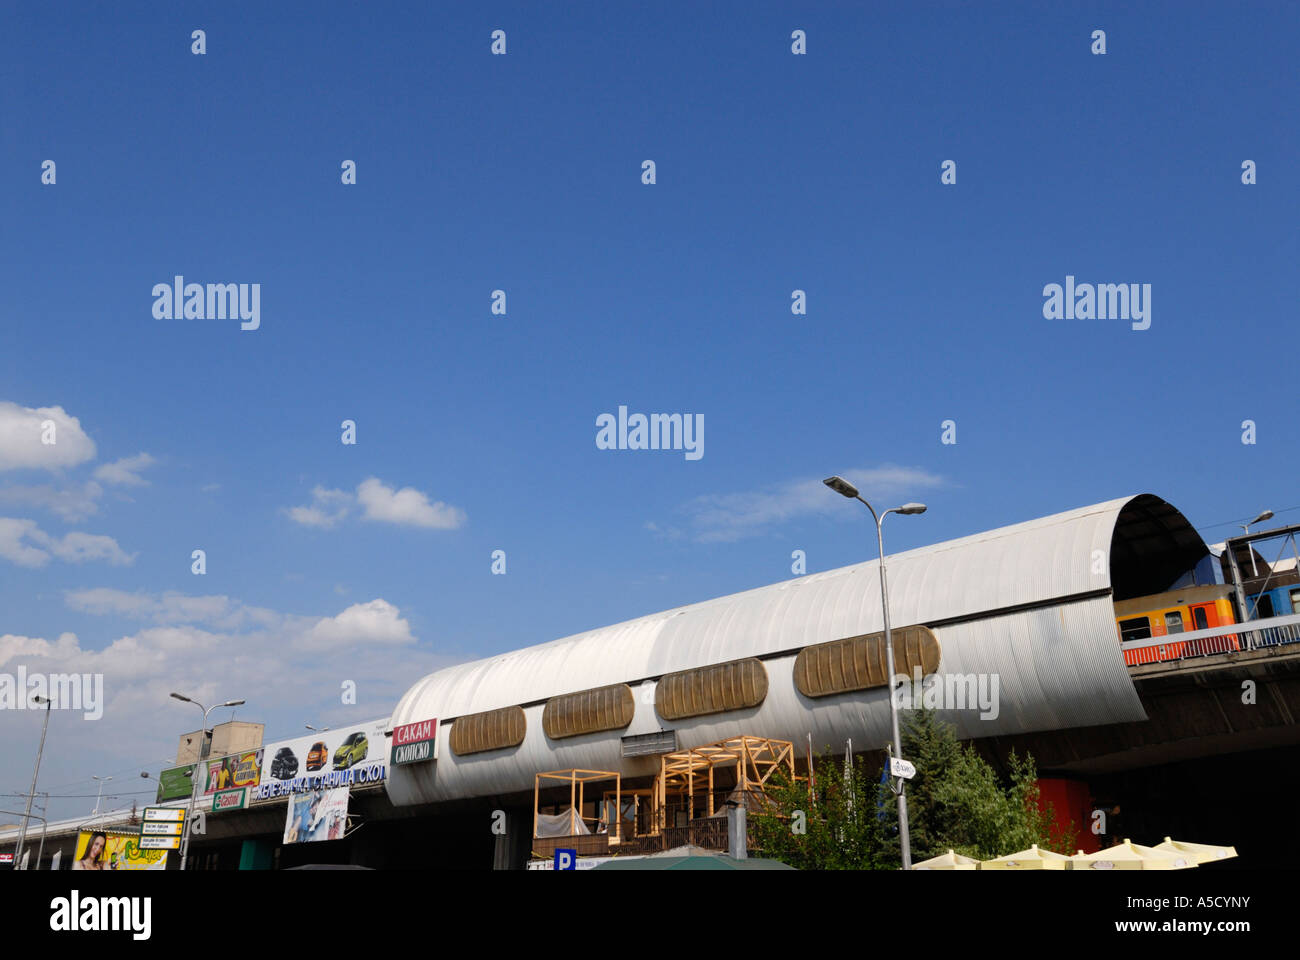 FYROM Republic of Macedonia. SKOPJE The new train station with a Balkan style futuristic design. Stock Photo